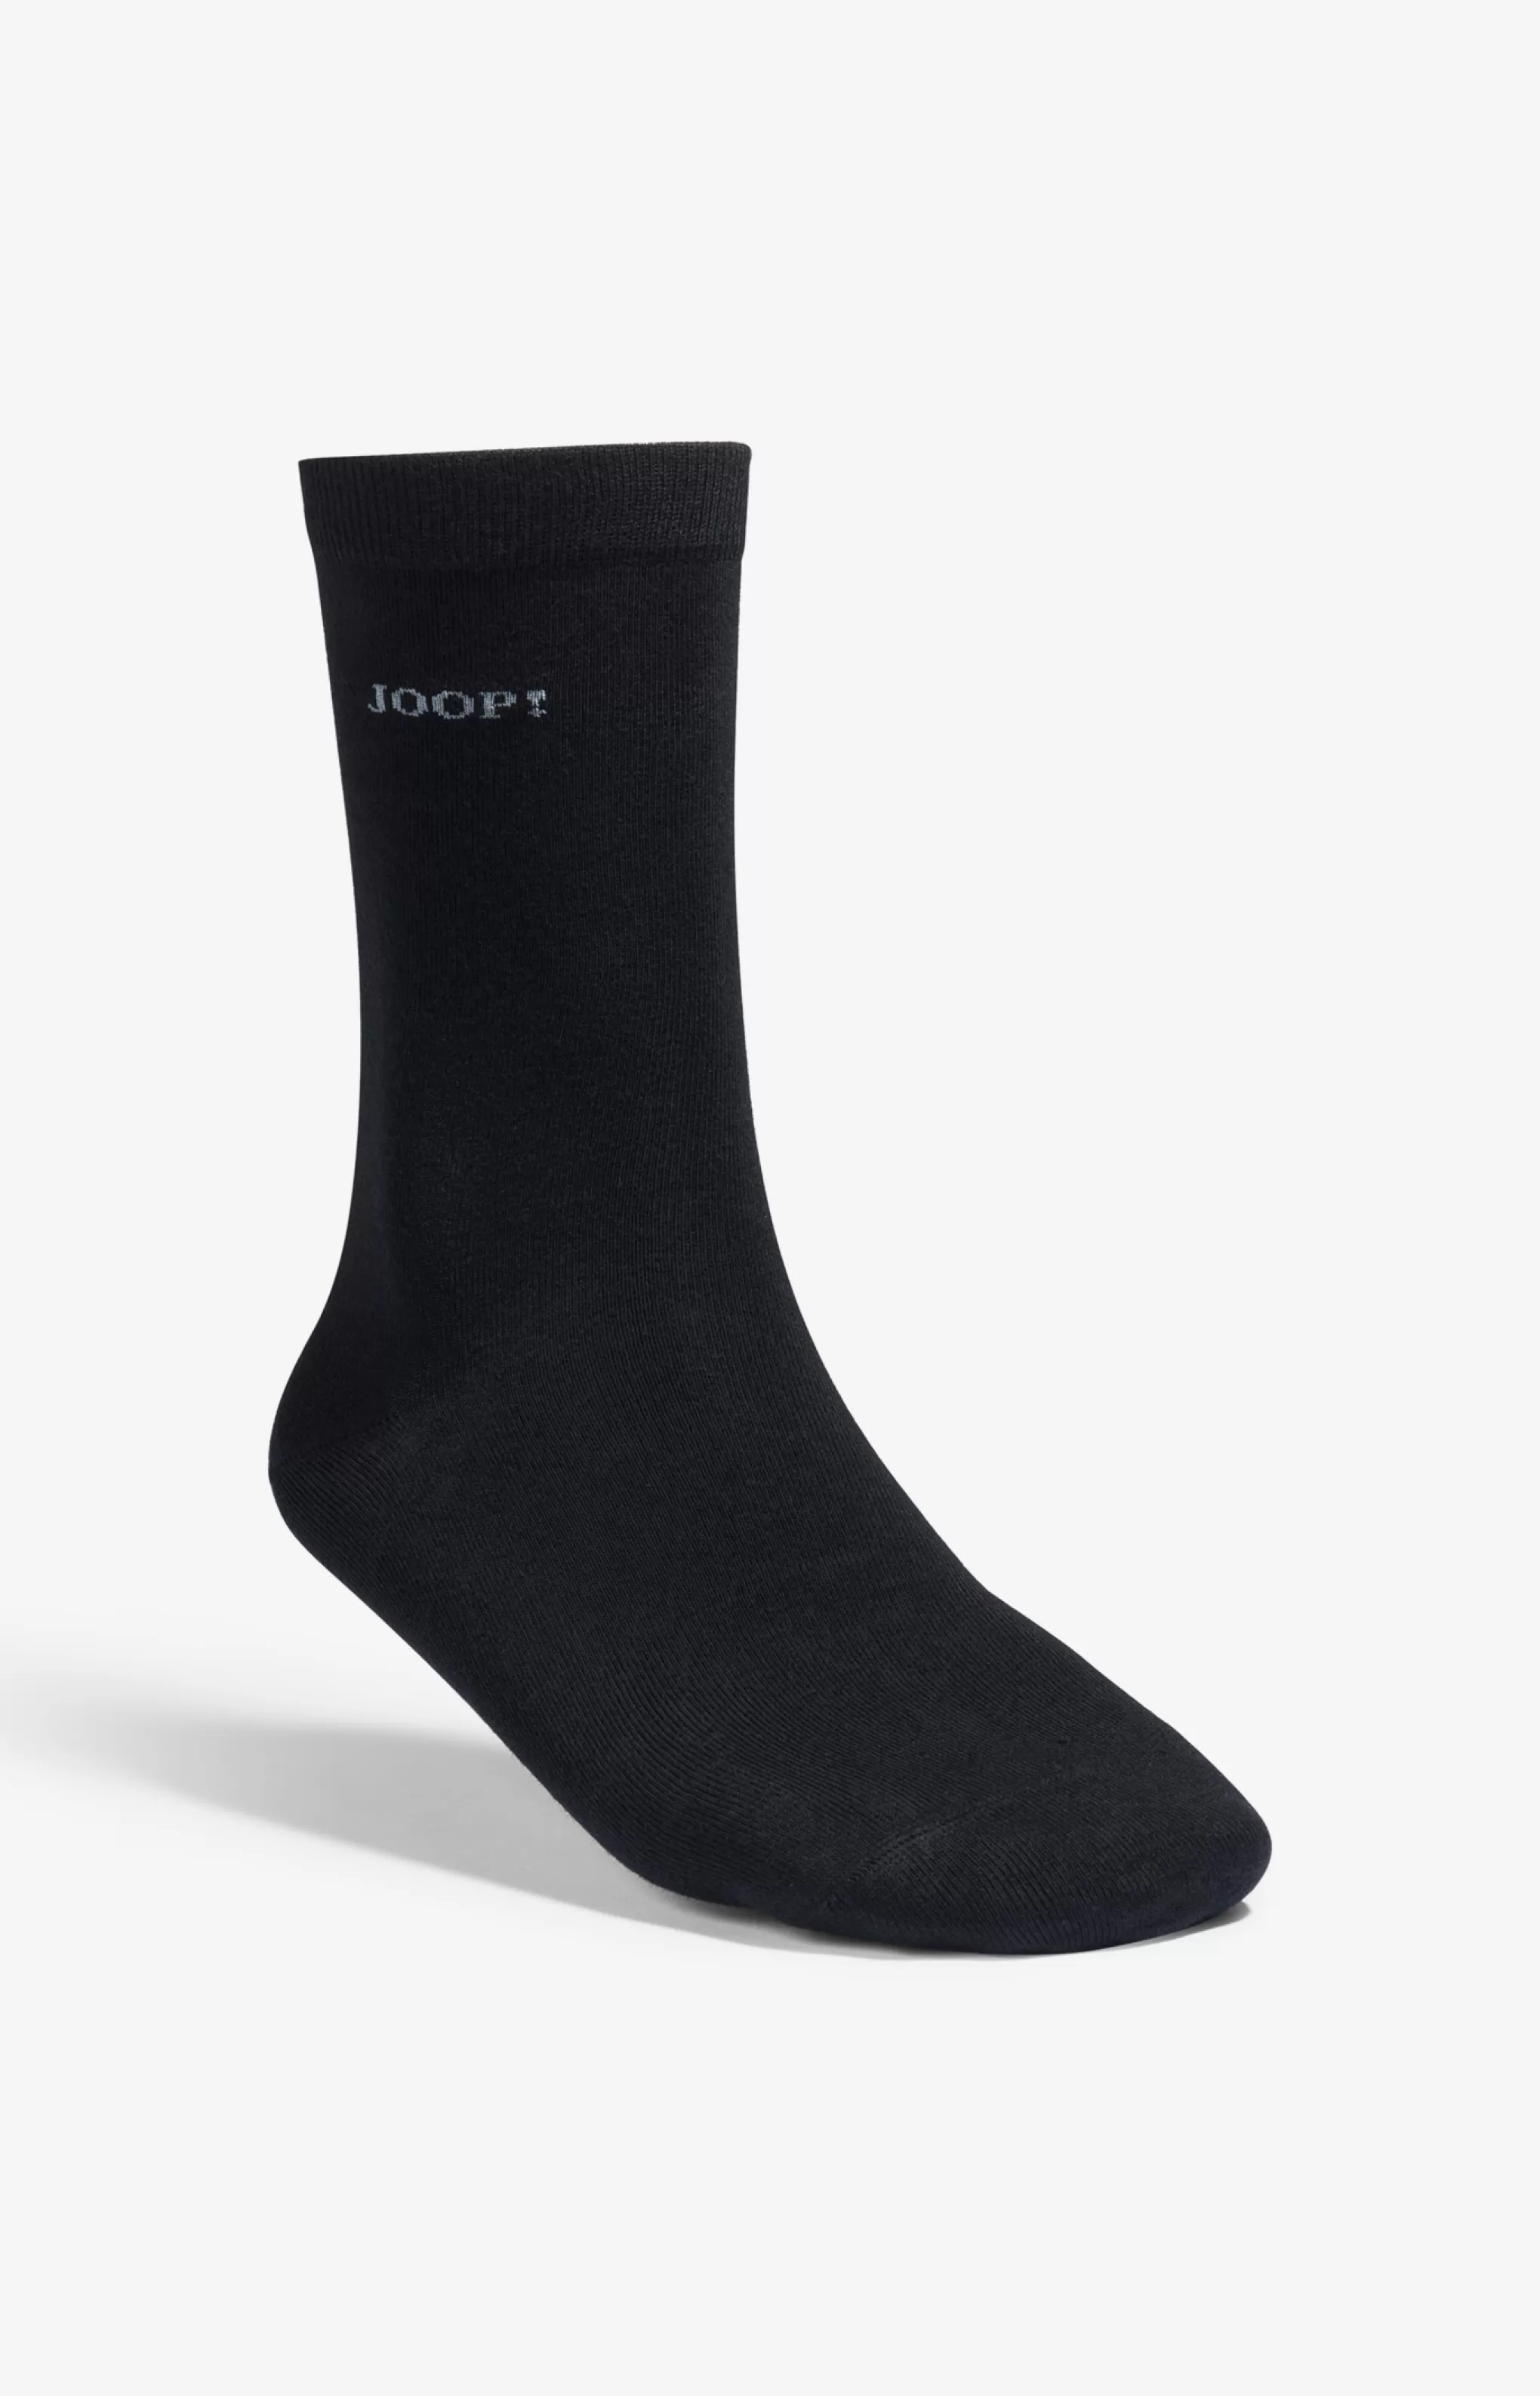 Socks*JOOP Socks 2-pack finest organic cotton socks in Black